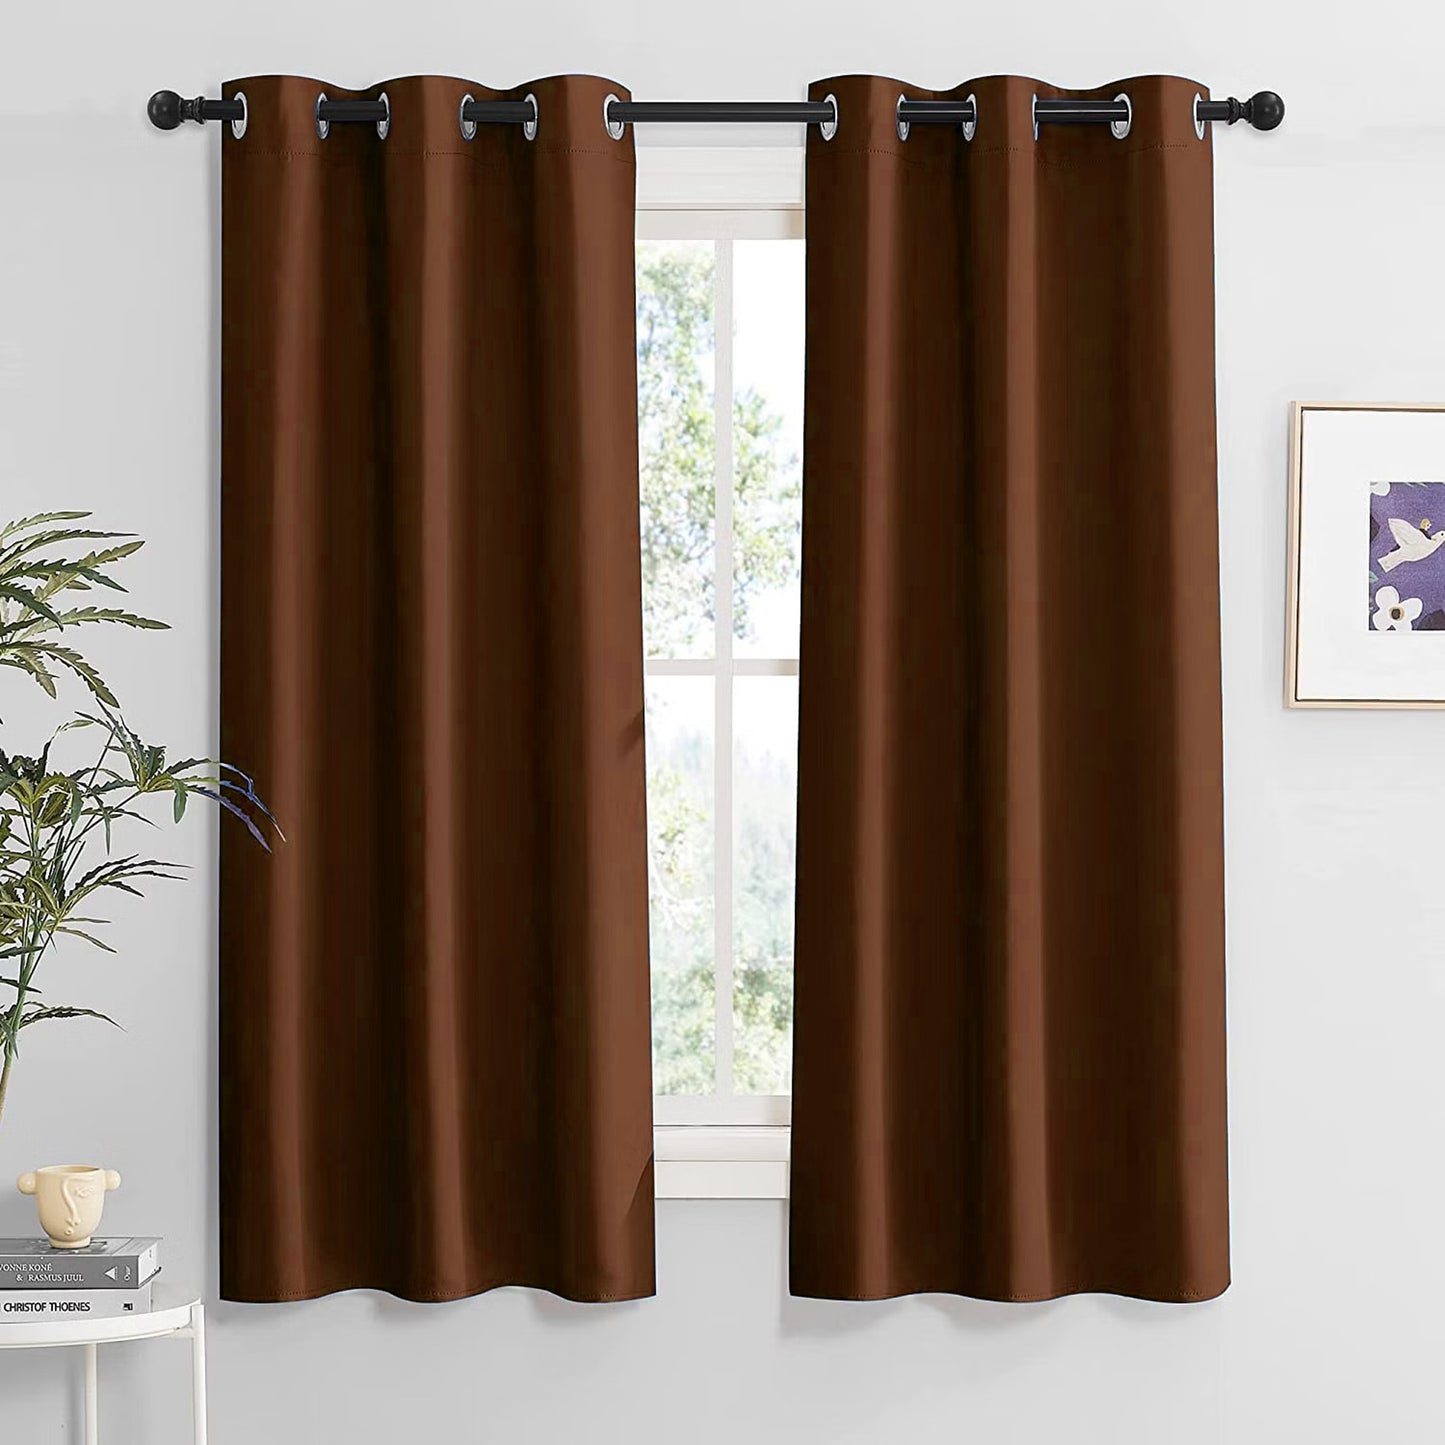 Razzai's Tripple Layer Room Darkening Noice Reducing Solid Curtain (Clinker)